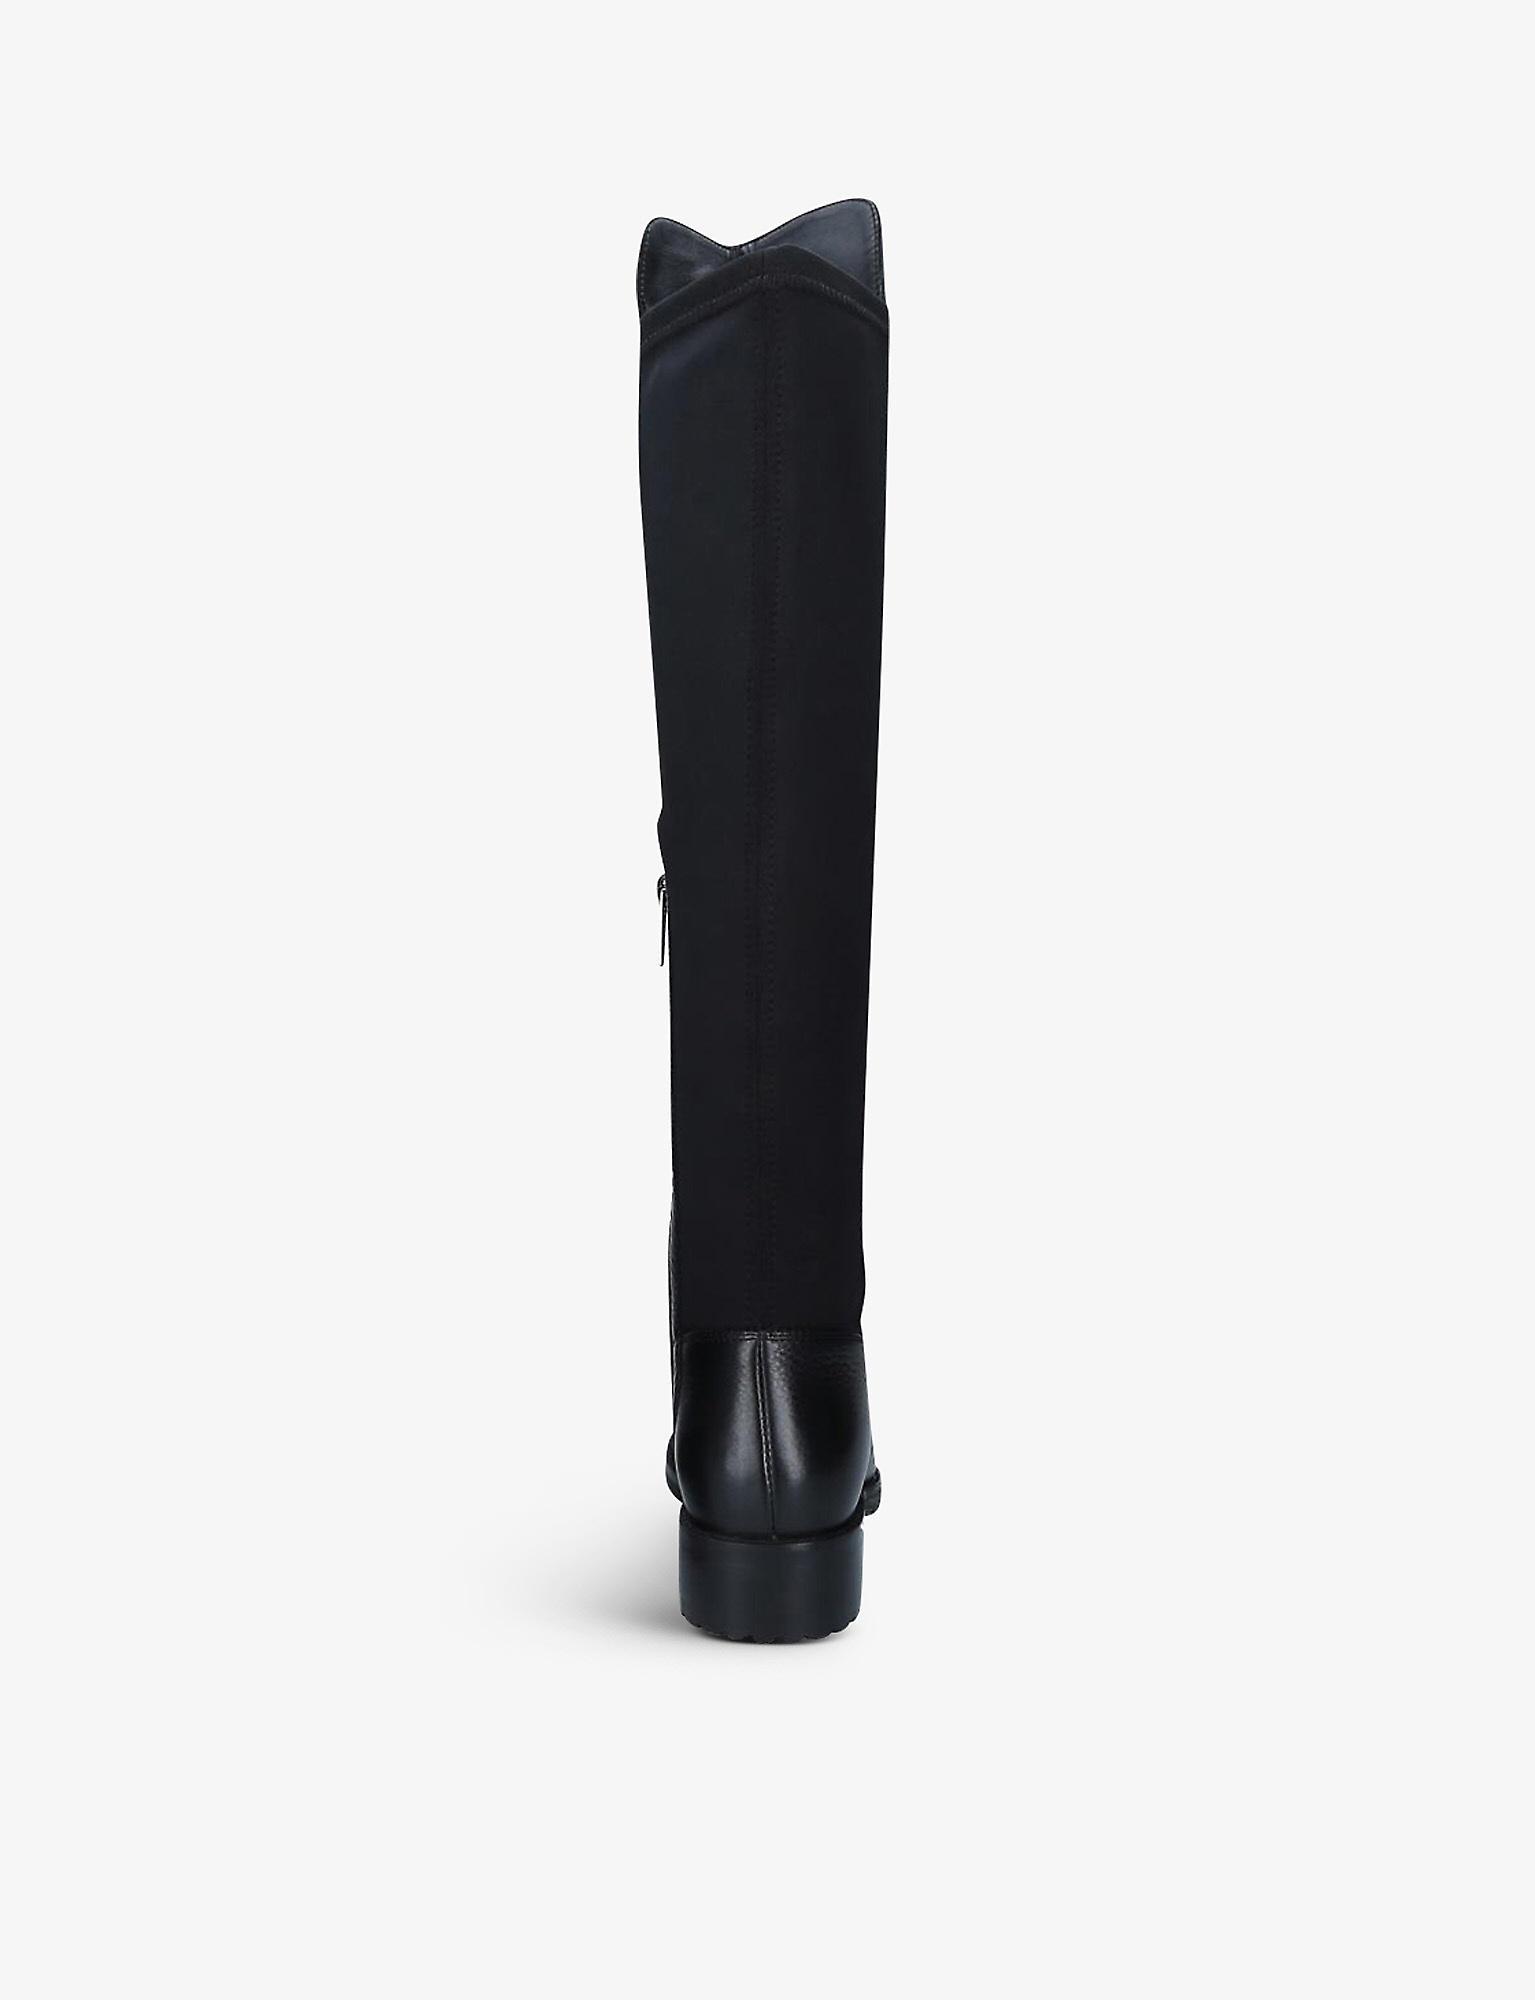 Carvela Kurt Geiger Vanessa Leather Knee-high Boots in Black - Lyst